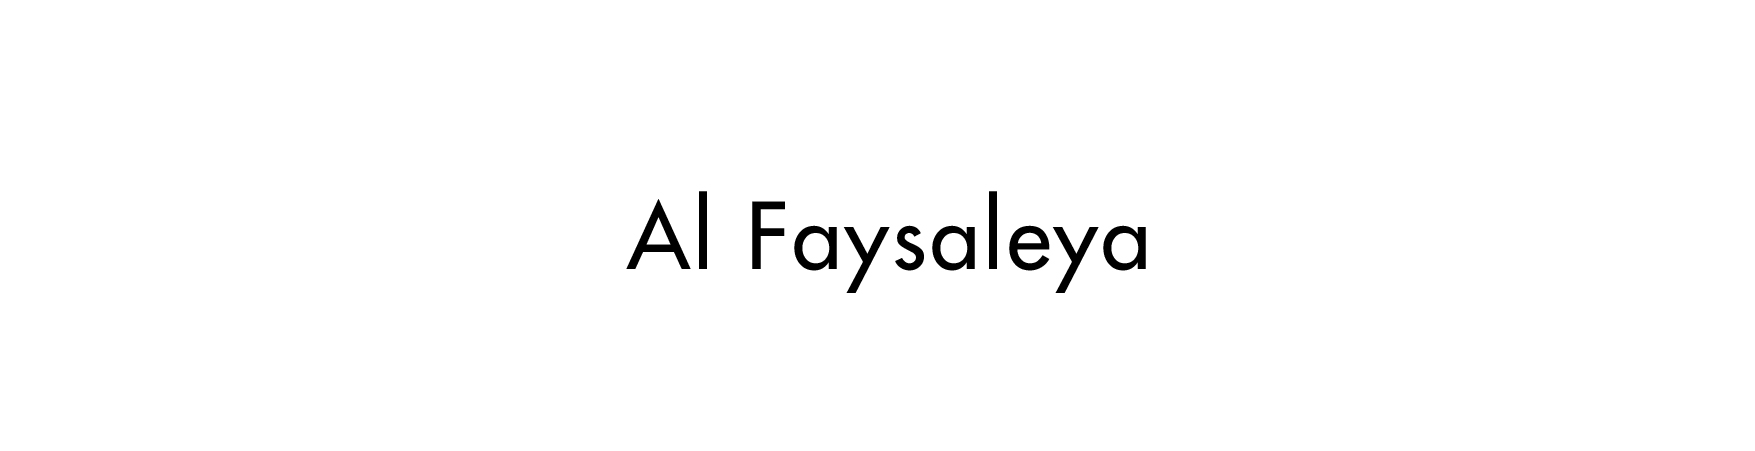 Al Faysaleya